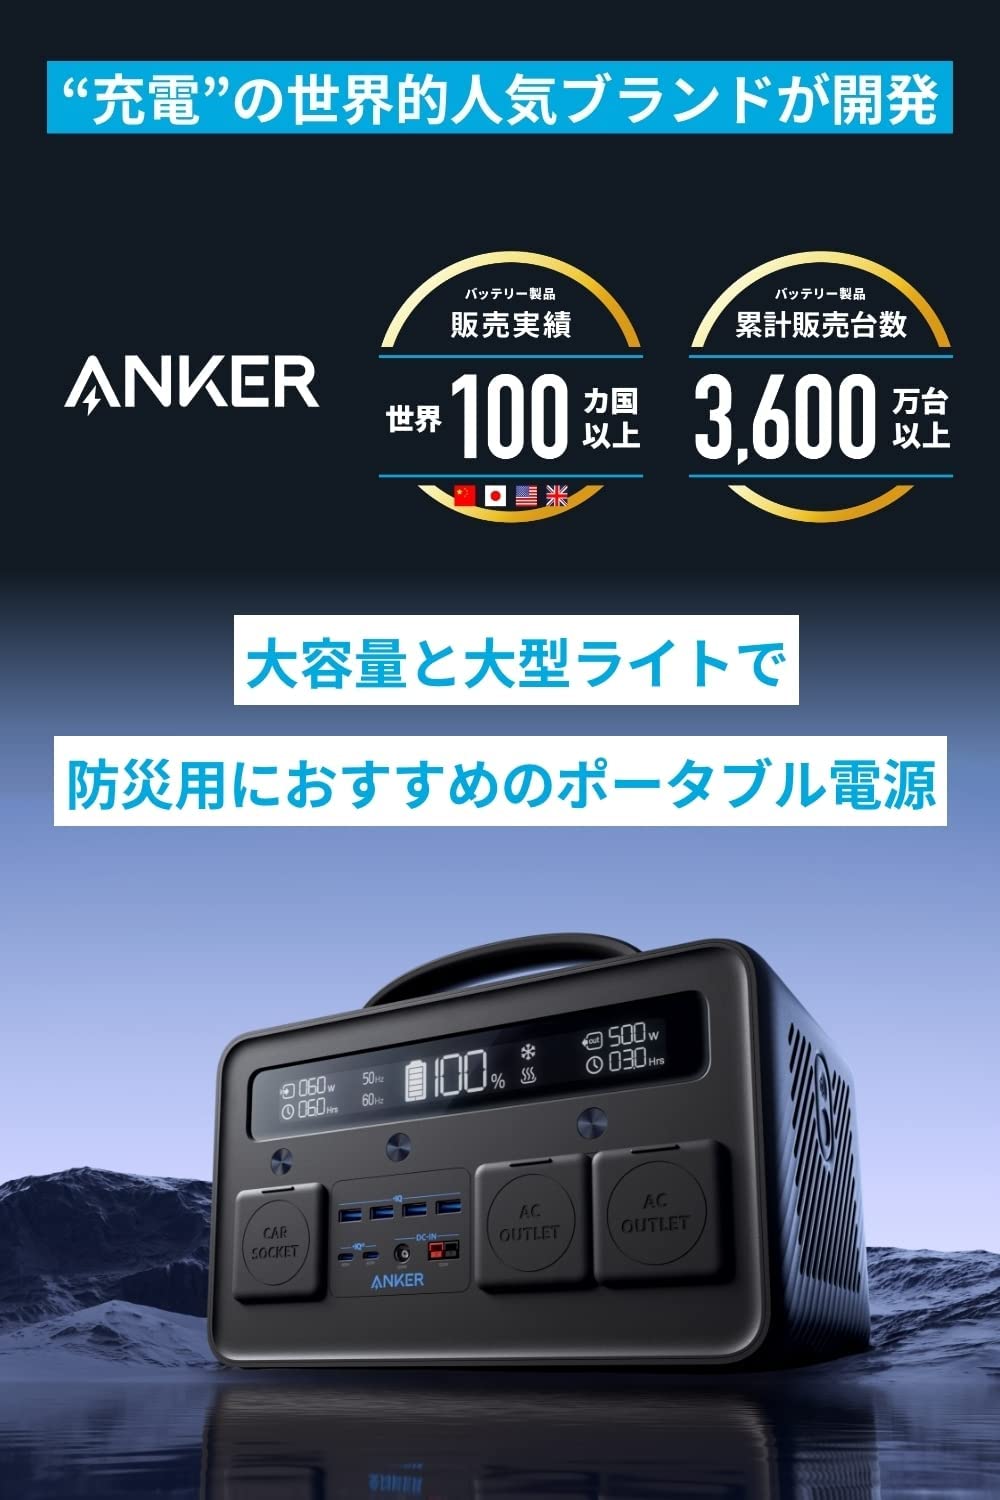 楽天市場】Anker PowerHouse II 700 (ポータブル電源 大容量)【大型